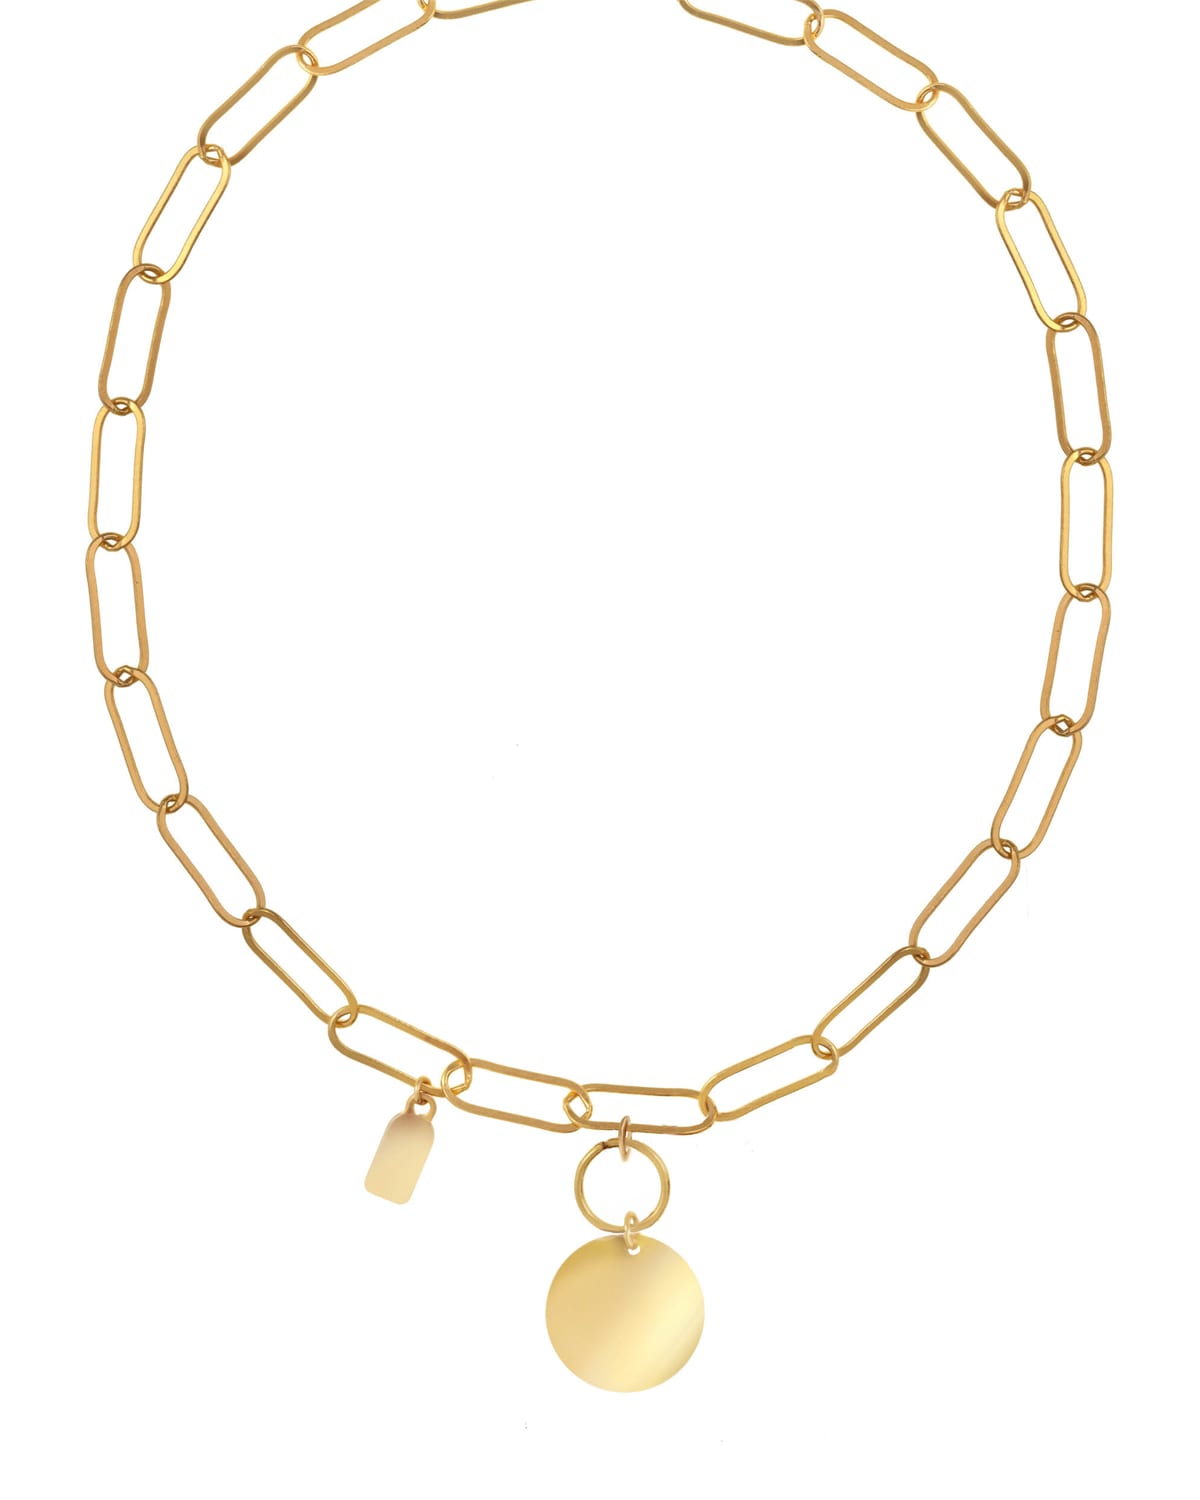 Kozakh Scarlett 14k Gold-filled Pendant Necklace